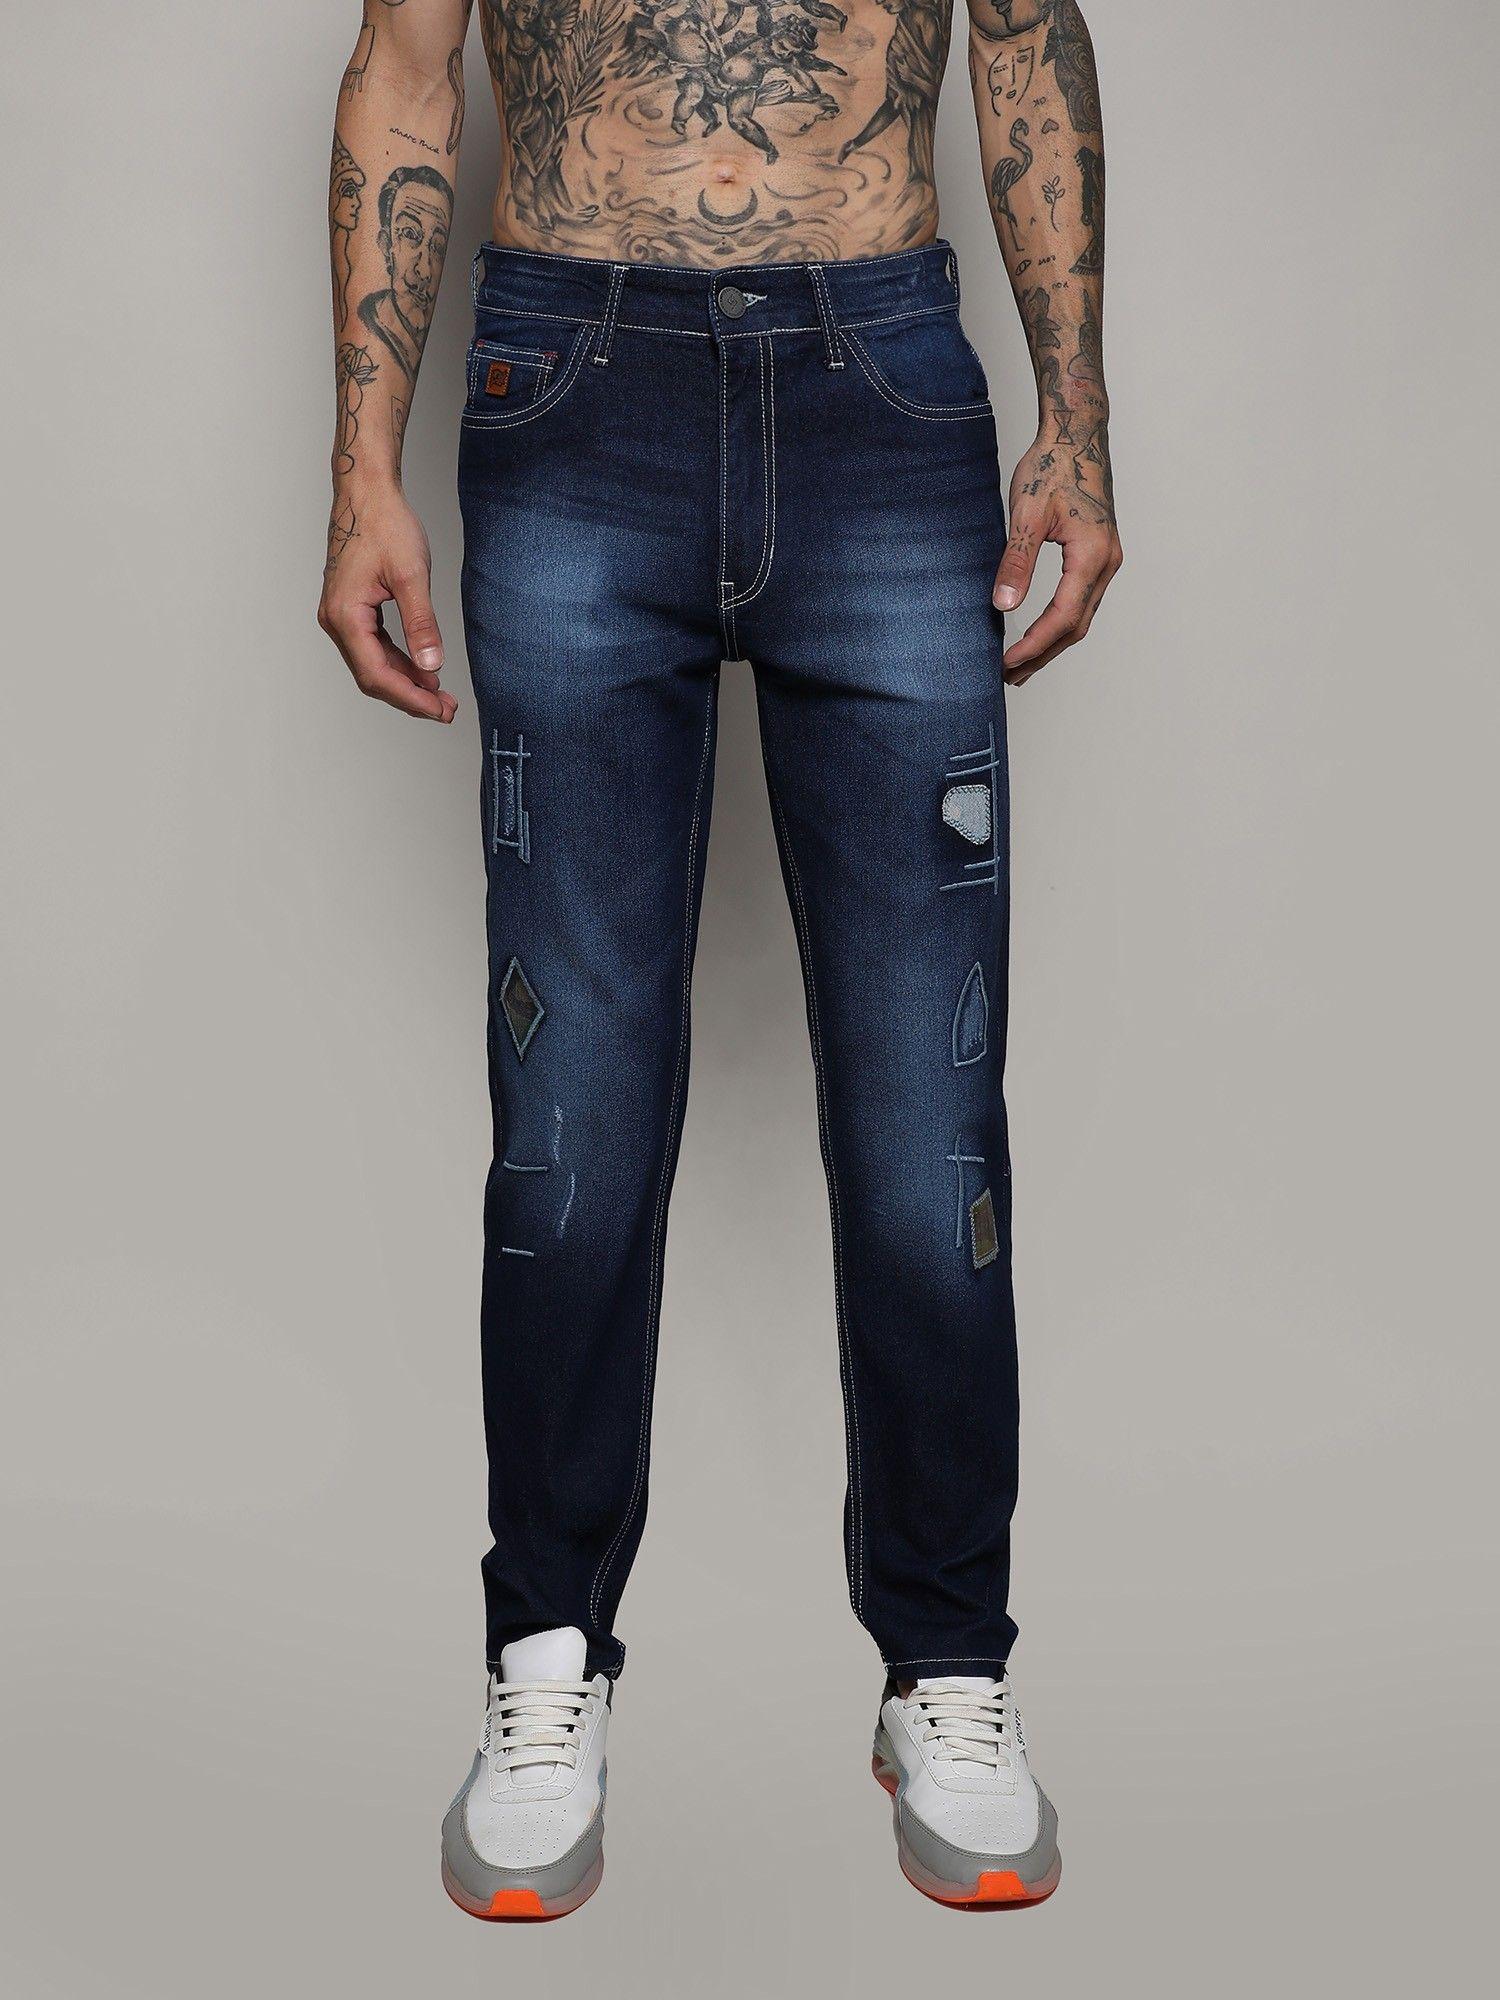 mens dark blue embroidered denim jeans